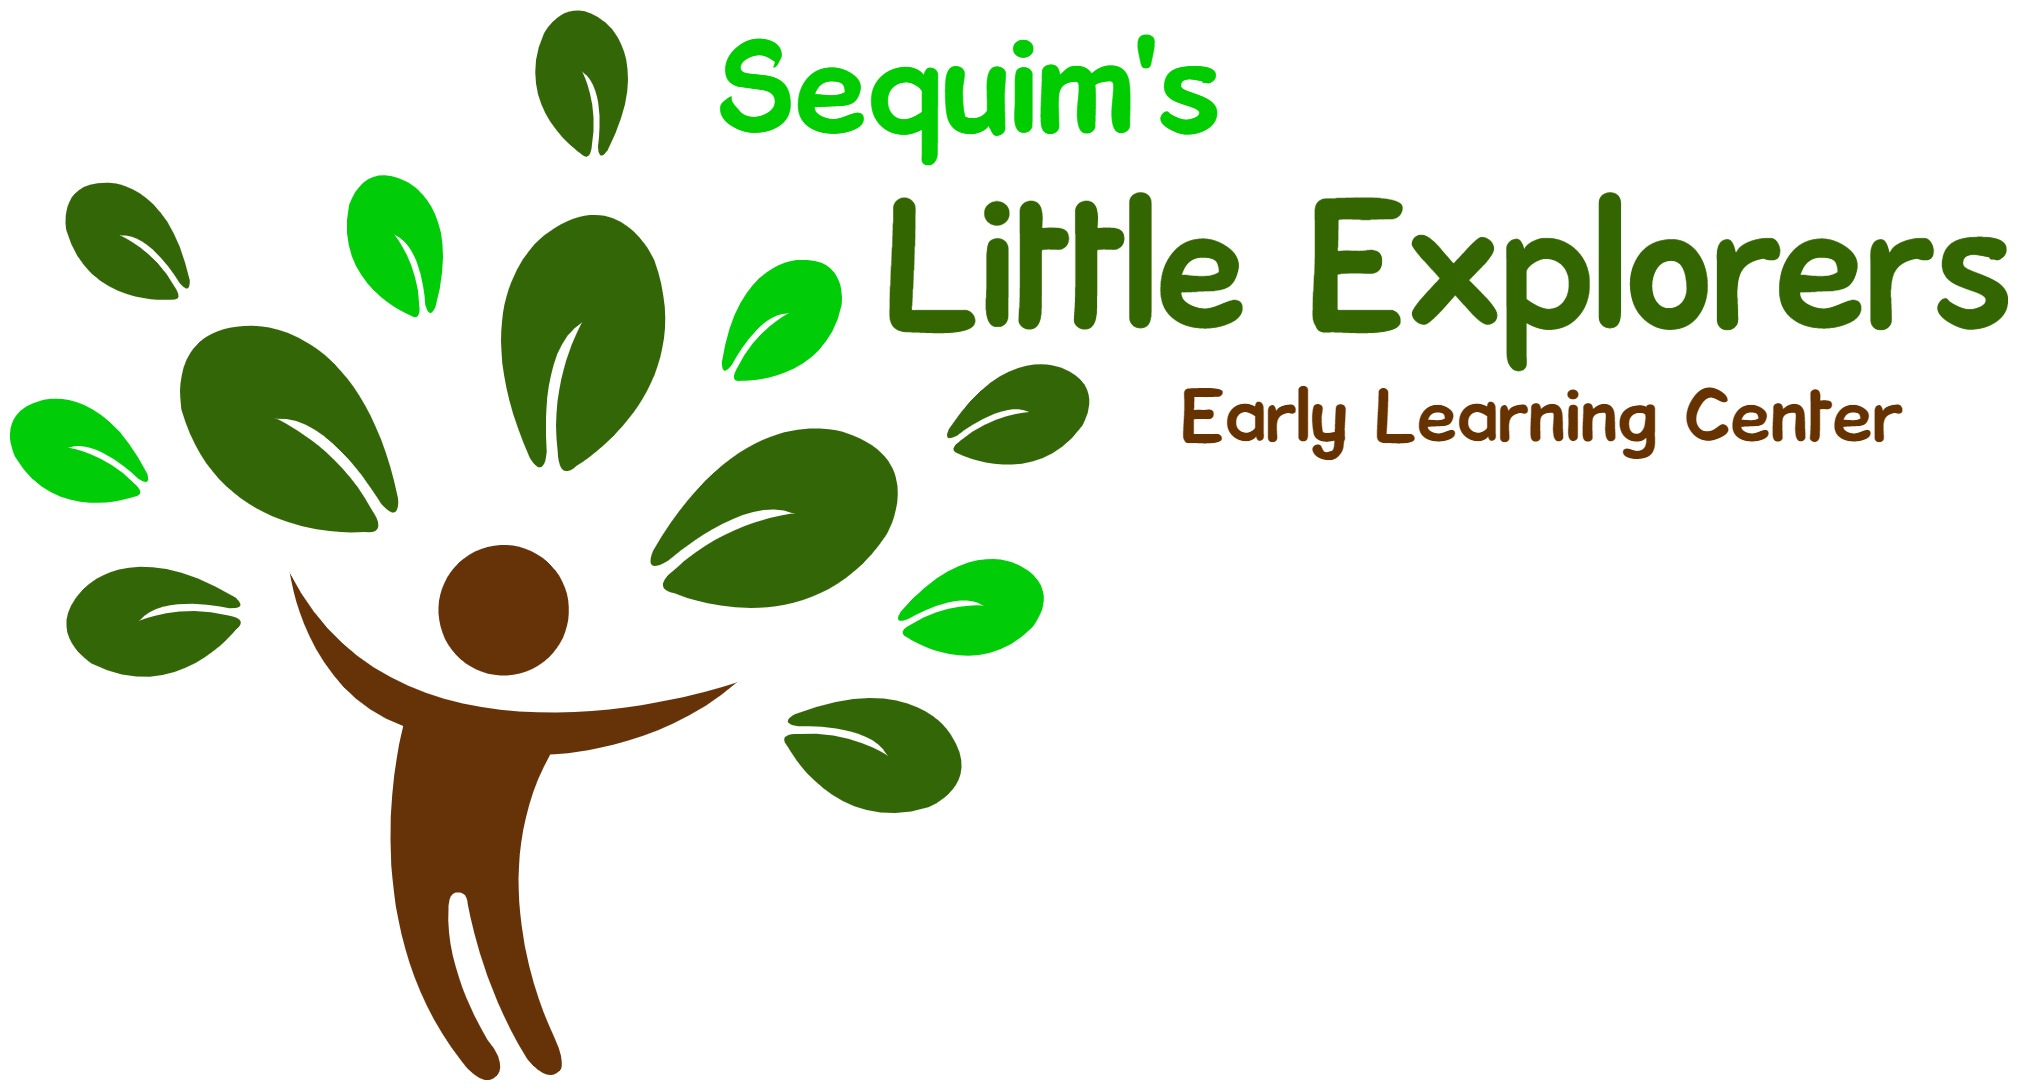 Sequims Little Explorers logo